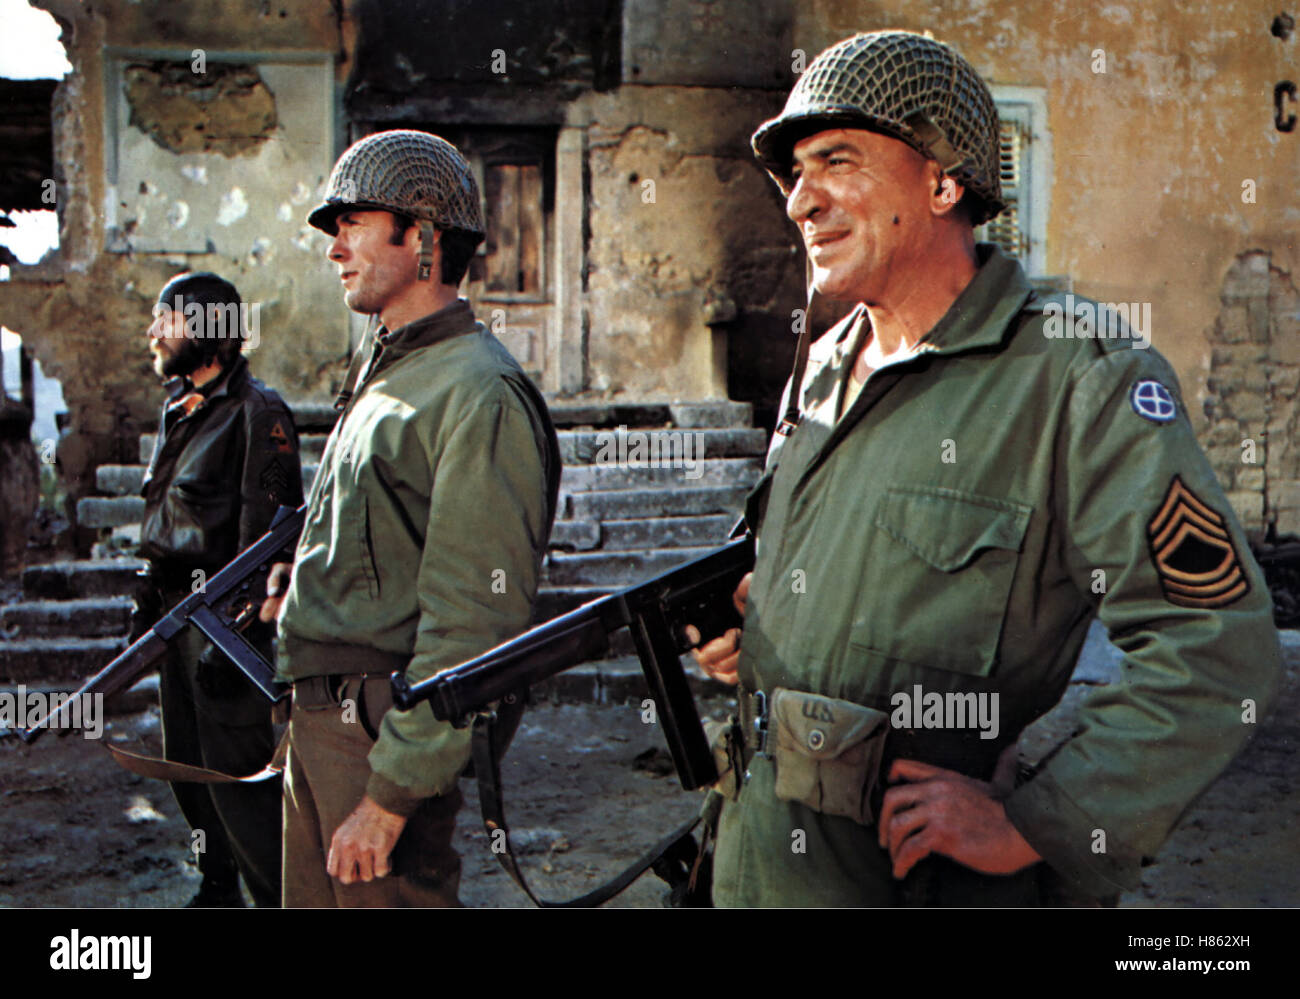 Stoßtrupp Gold, (KELLY'S HEROES) USA 1969, Regie: Brian G. Hutton, DONALD SUTHERLAND, CLINT EASTWOOD, TELLY SAVALAS, Stichwort: Soldat, Helm, Uniform, Maschinenpistole Stock Photo